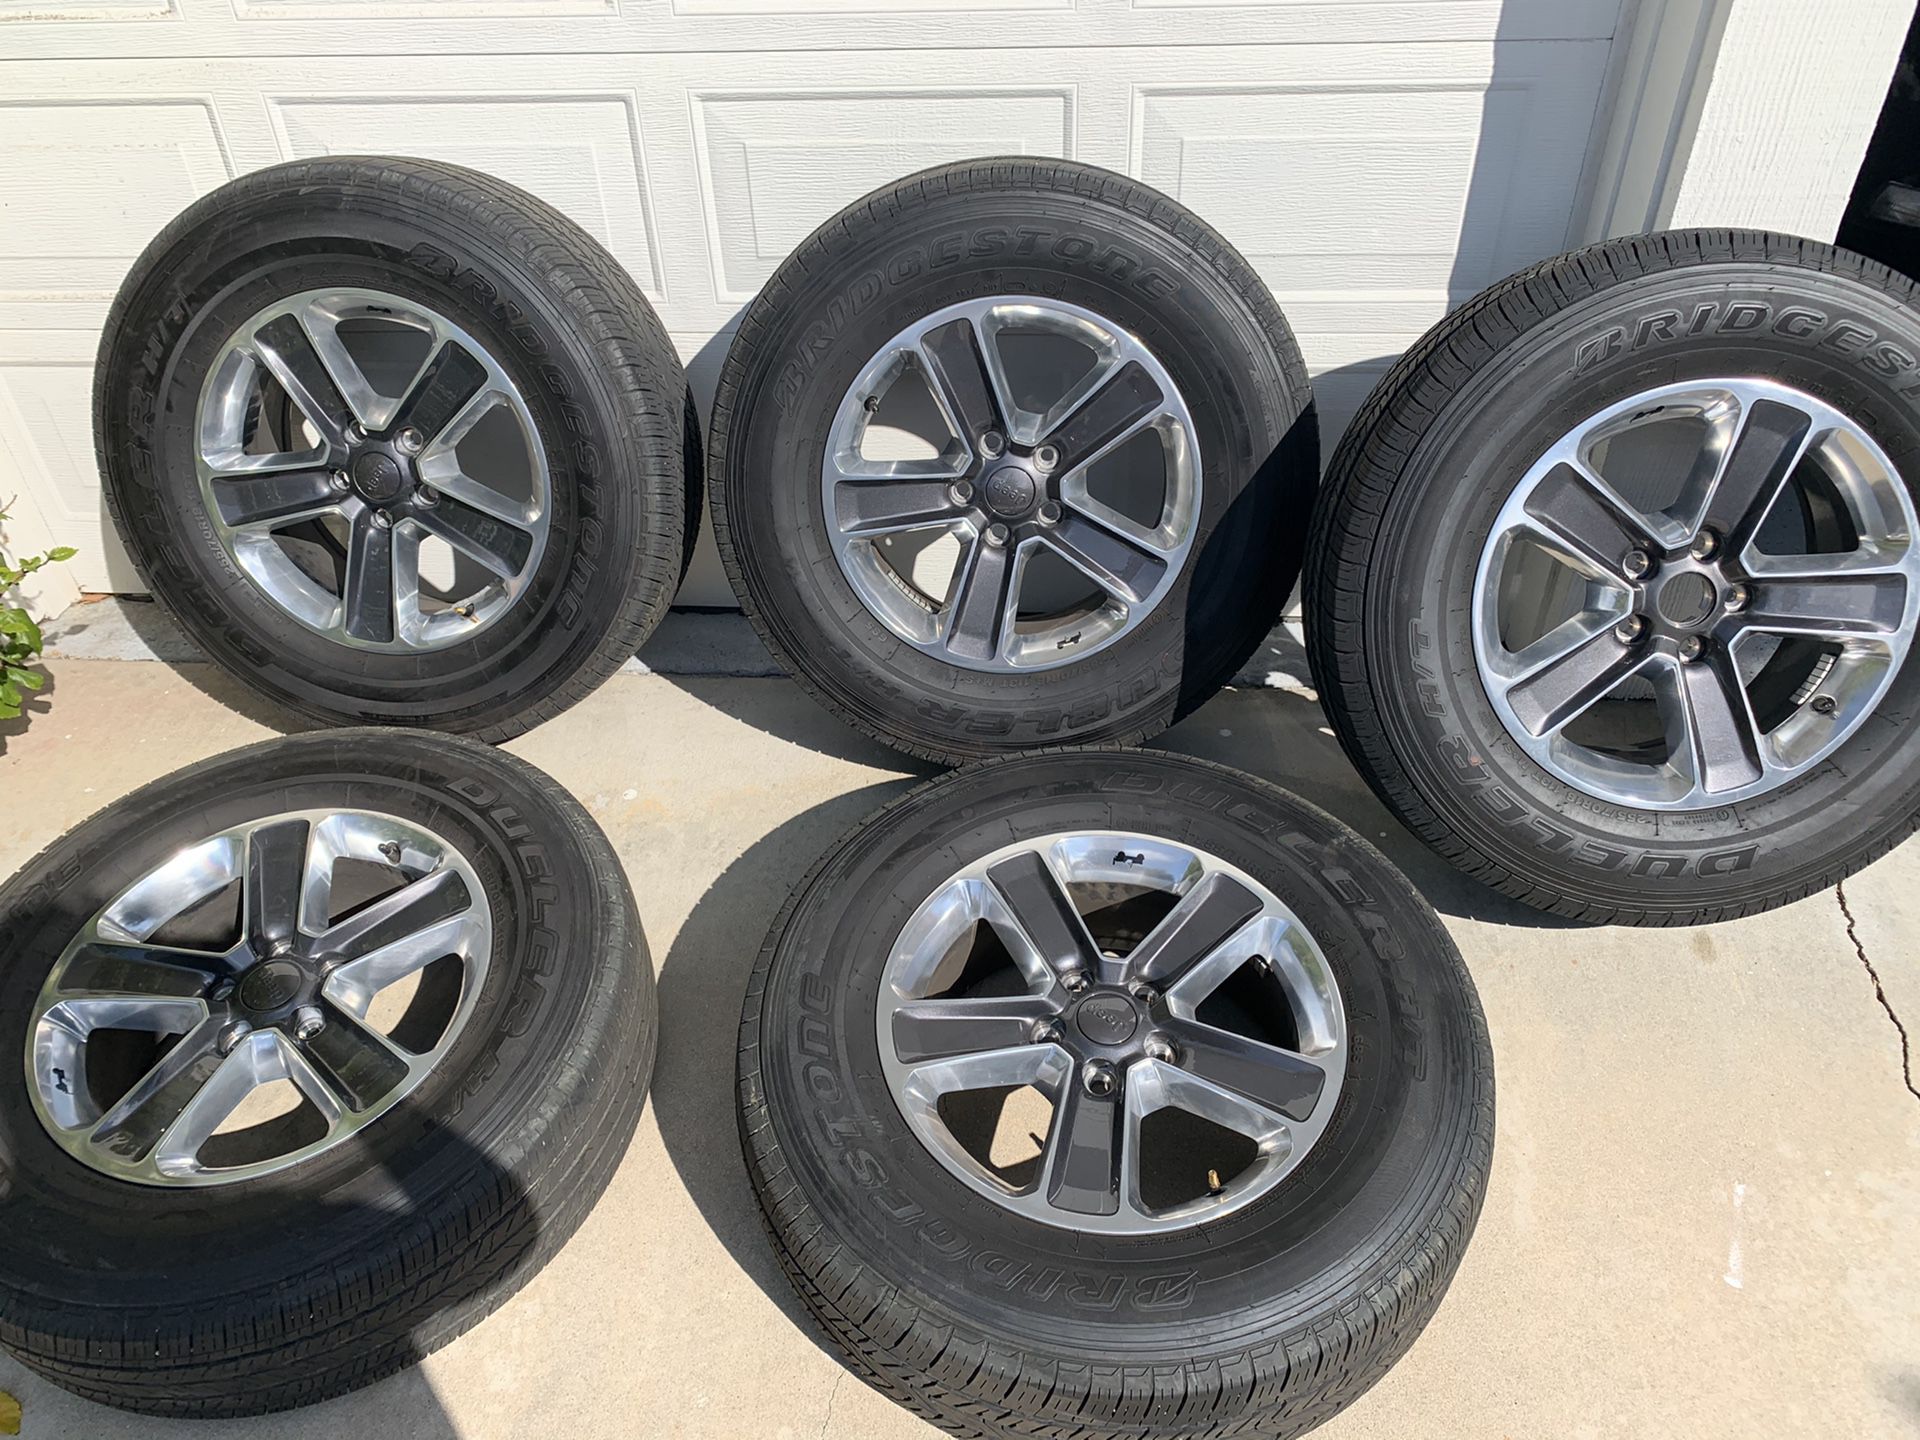 2019 Jeep Wrangler Sahara wheels and tires set of 5